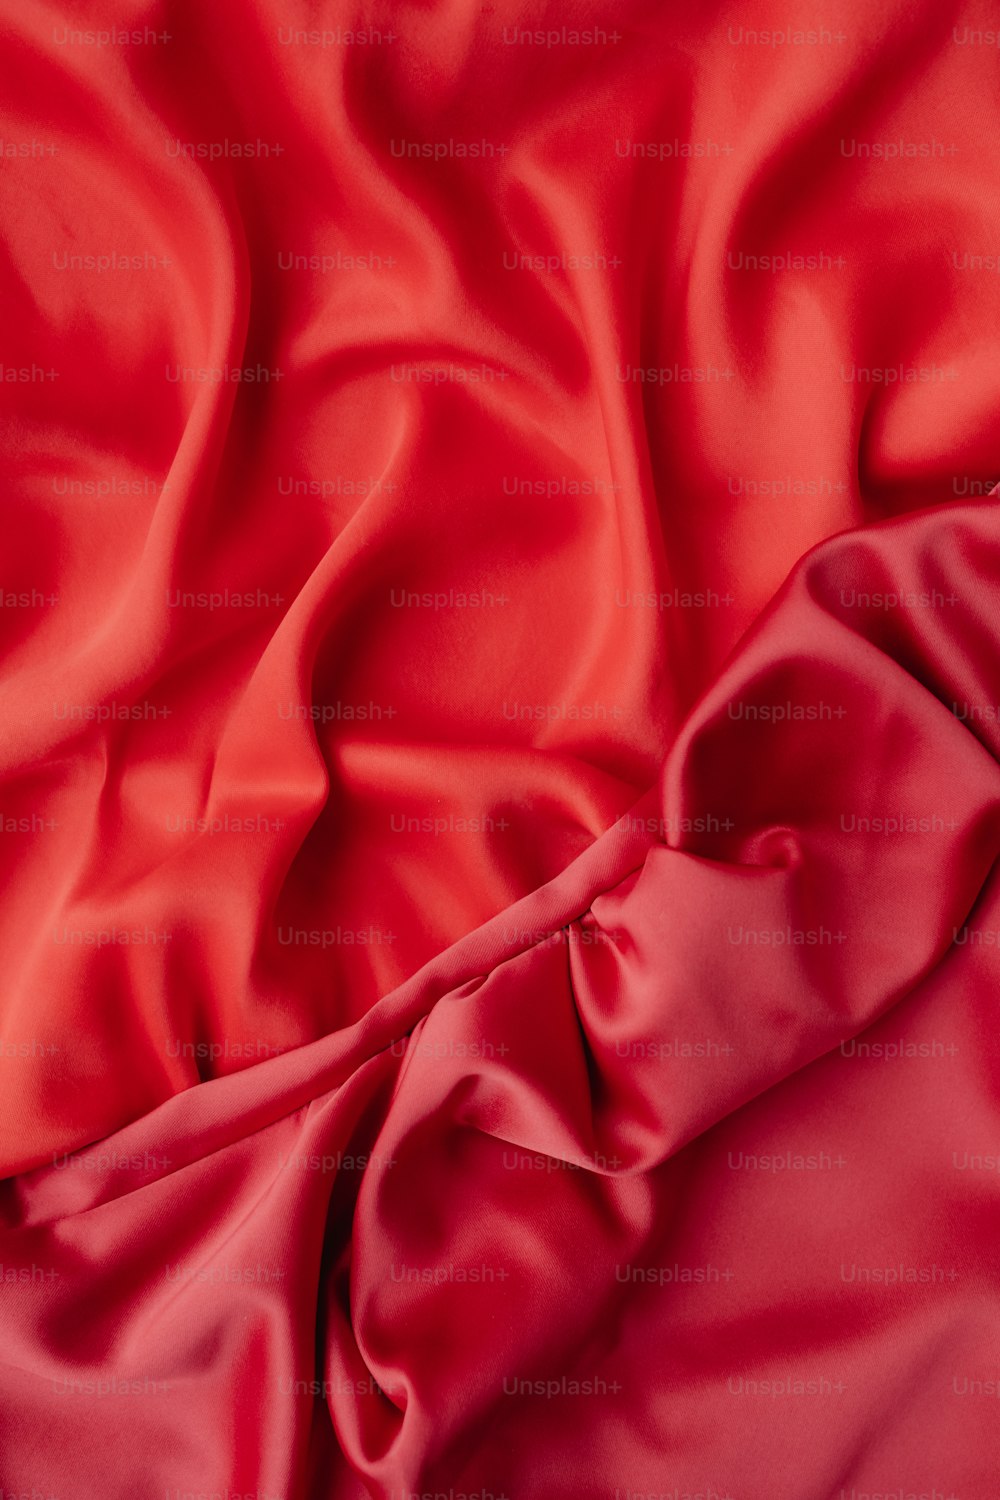 Silk Red - fabric fabric